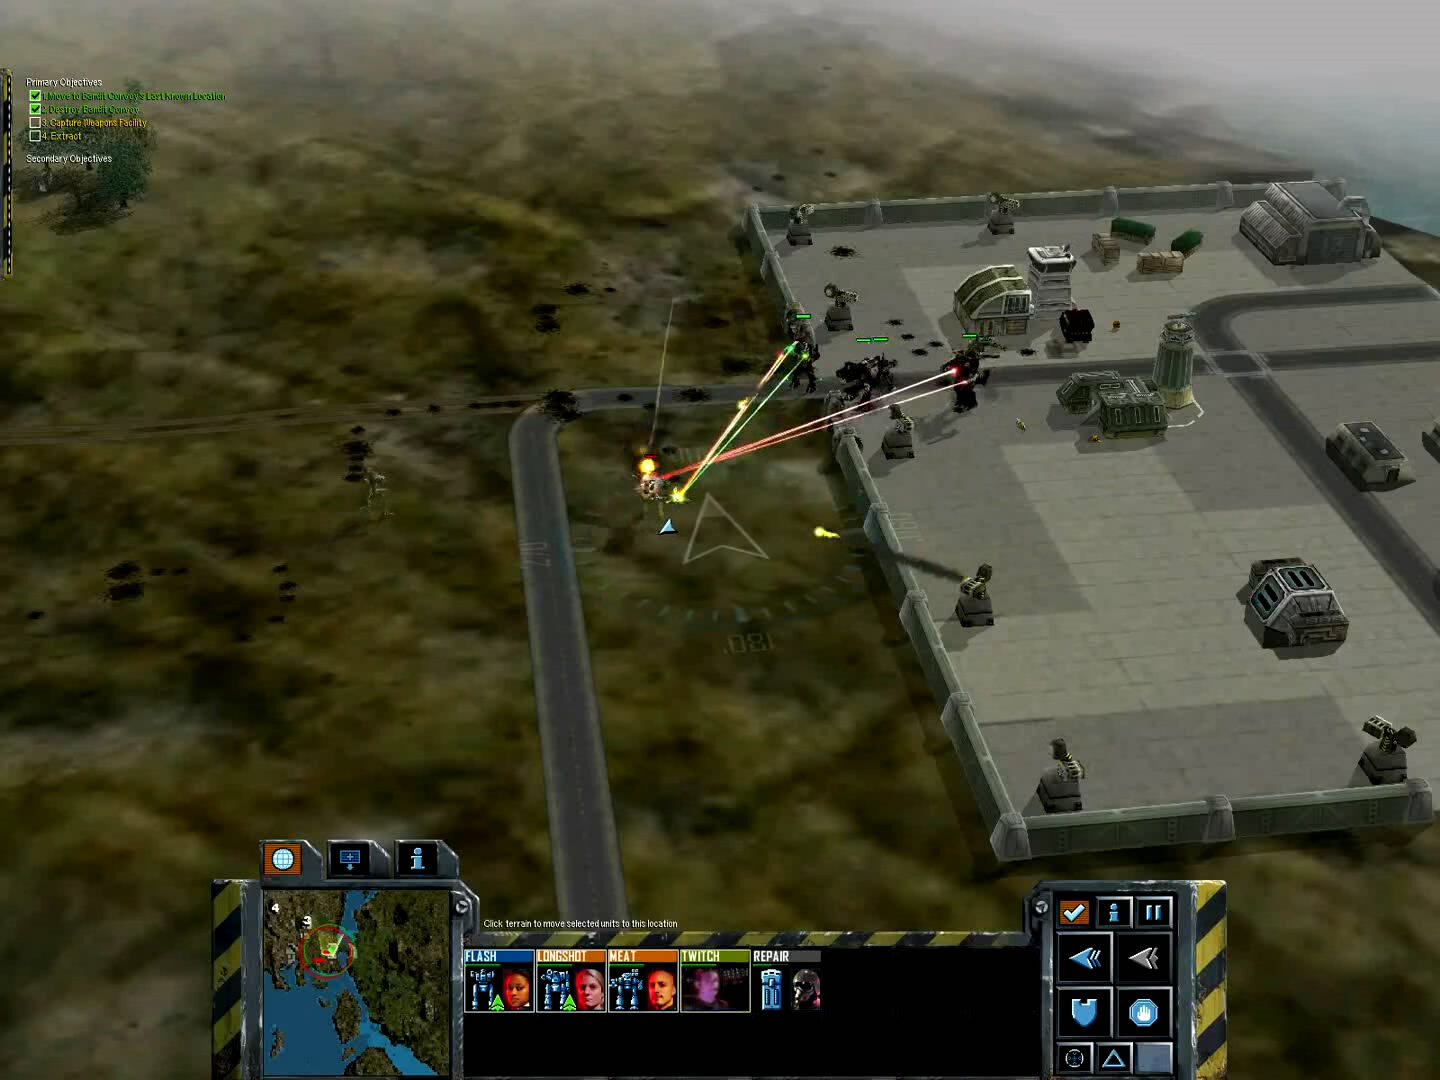 MechCommander 2 - Steiner Campaign - Mission 4 - Search & Destroy: Bandit Convoy